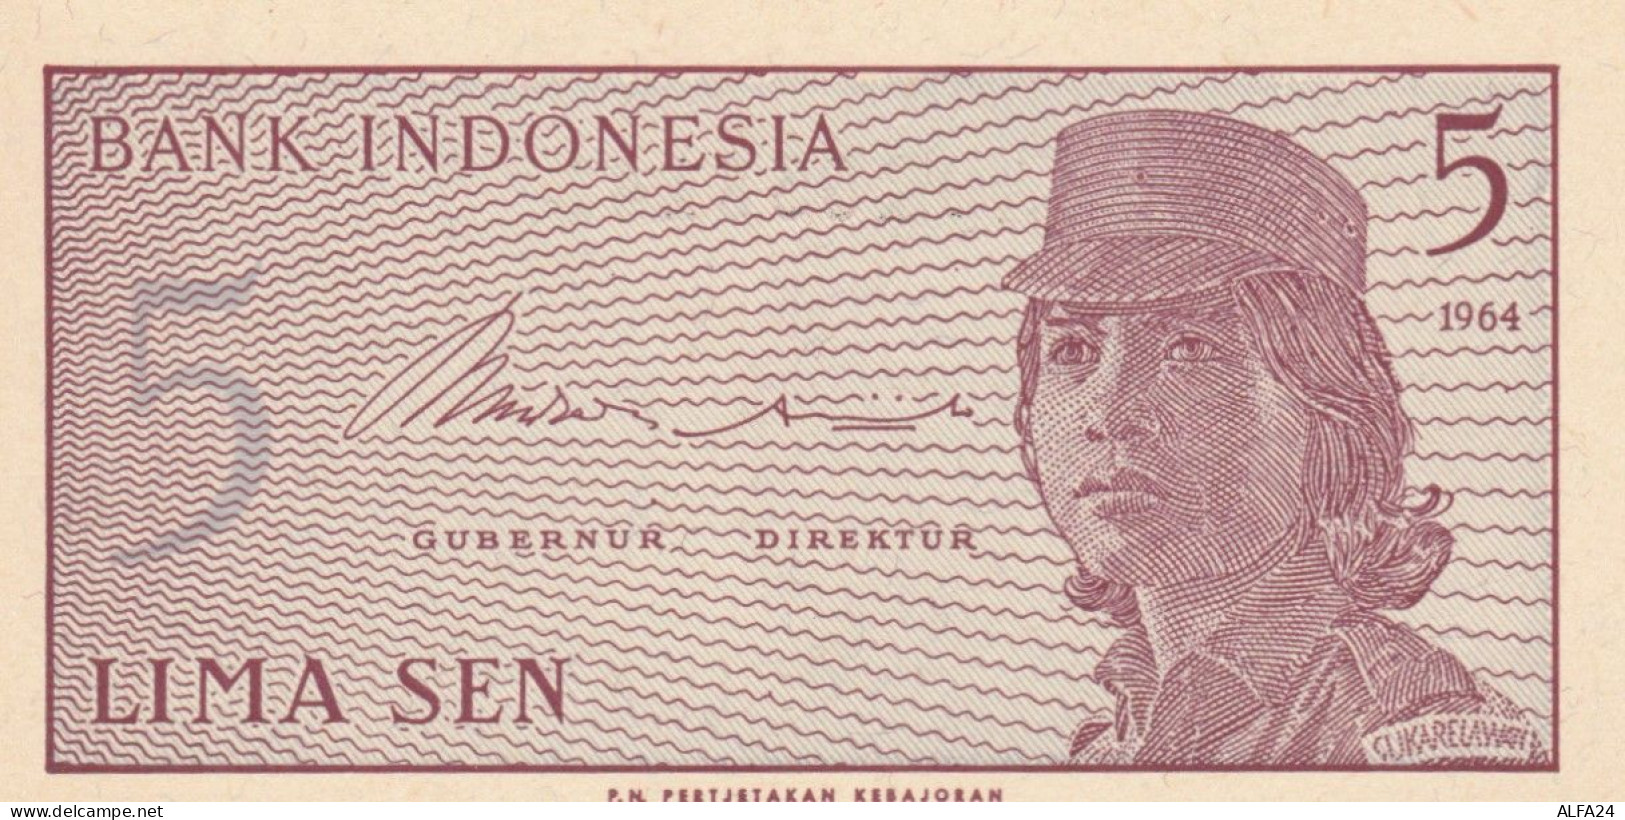 BANCONOTA INDONESIA 5 UNC (MK513 - Indonésie